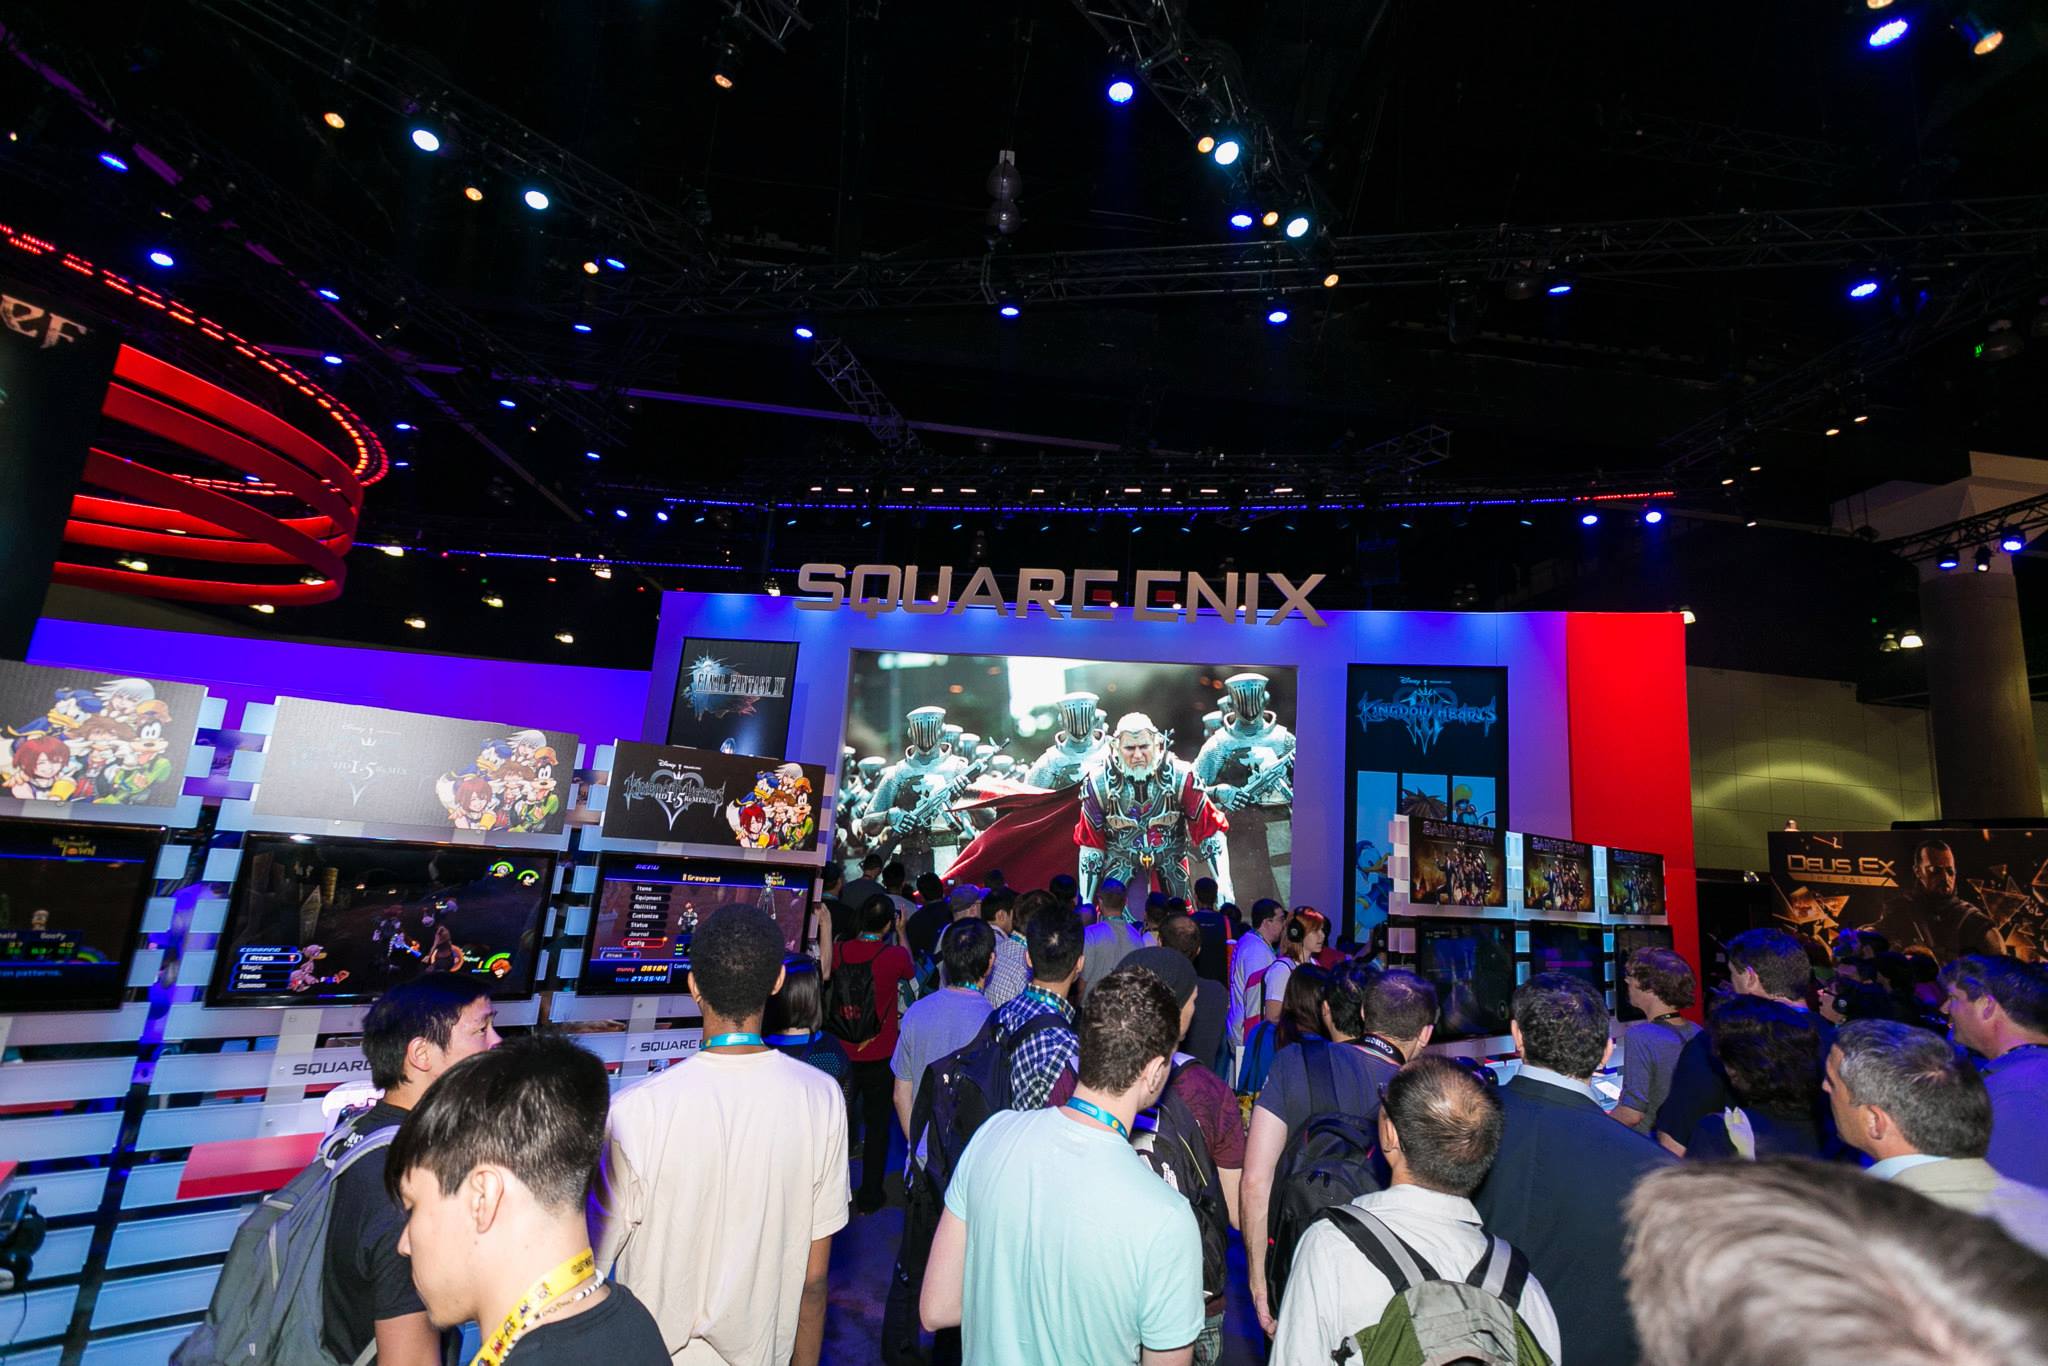 SQUARE ENIX E3 2013 wrap up - Square Enix News // Hell and Heaven Net